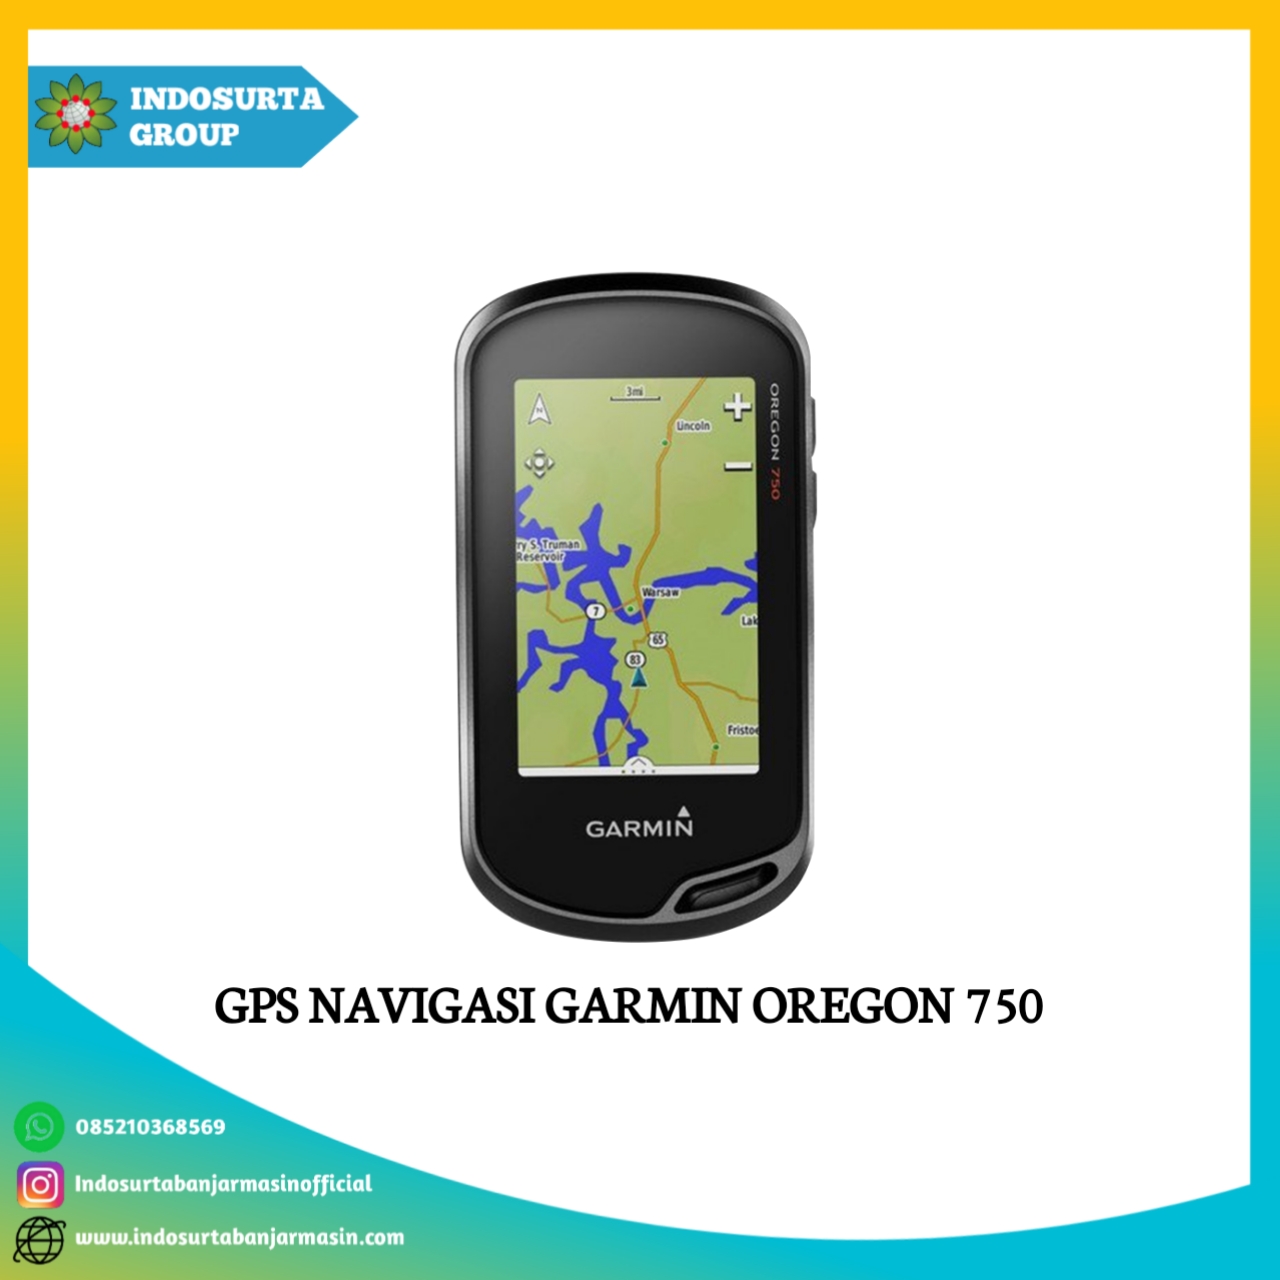 GPS NAVIGASI GARMIN OREGON 750